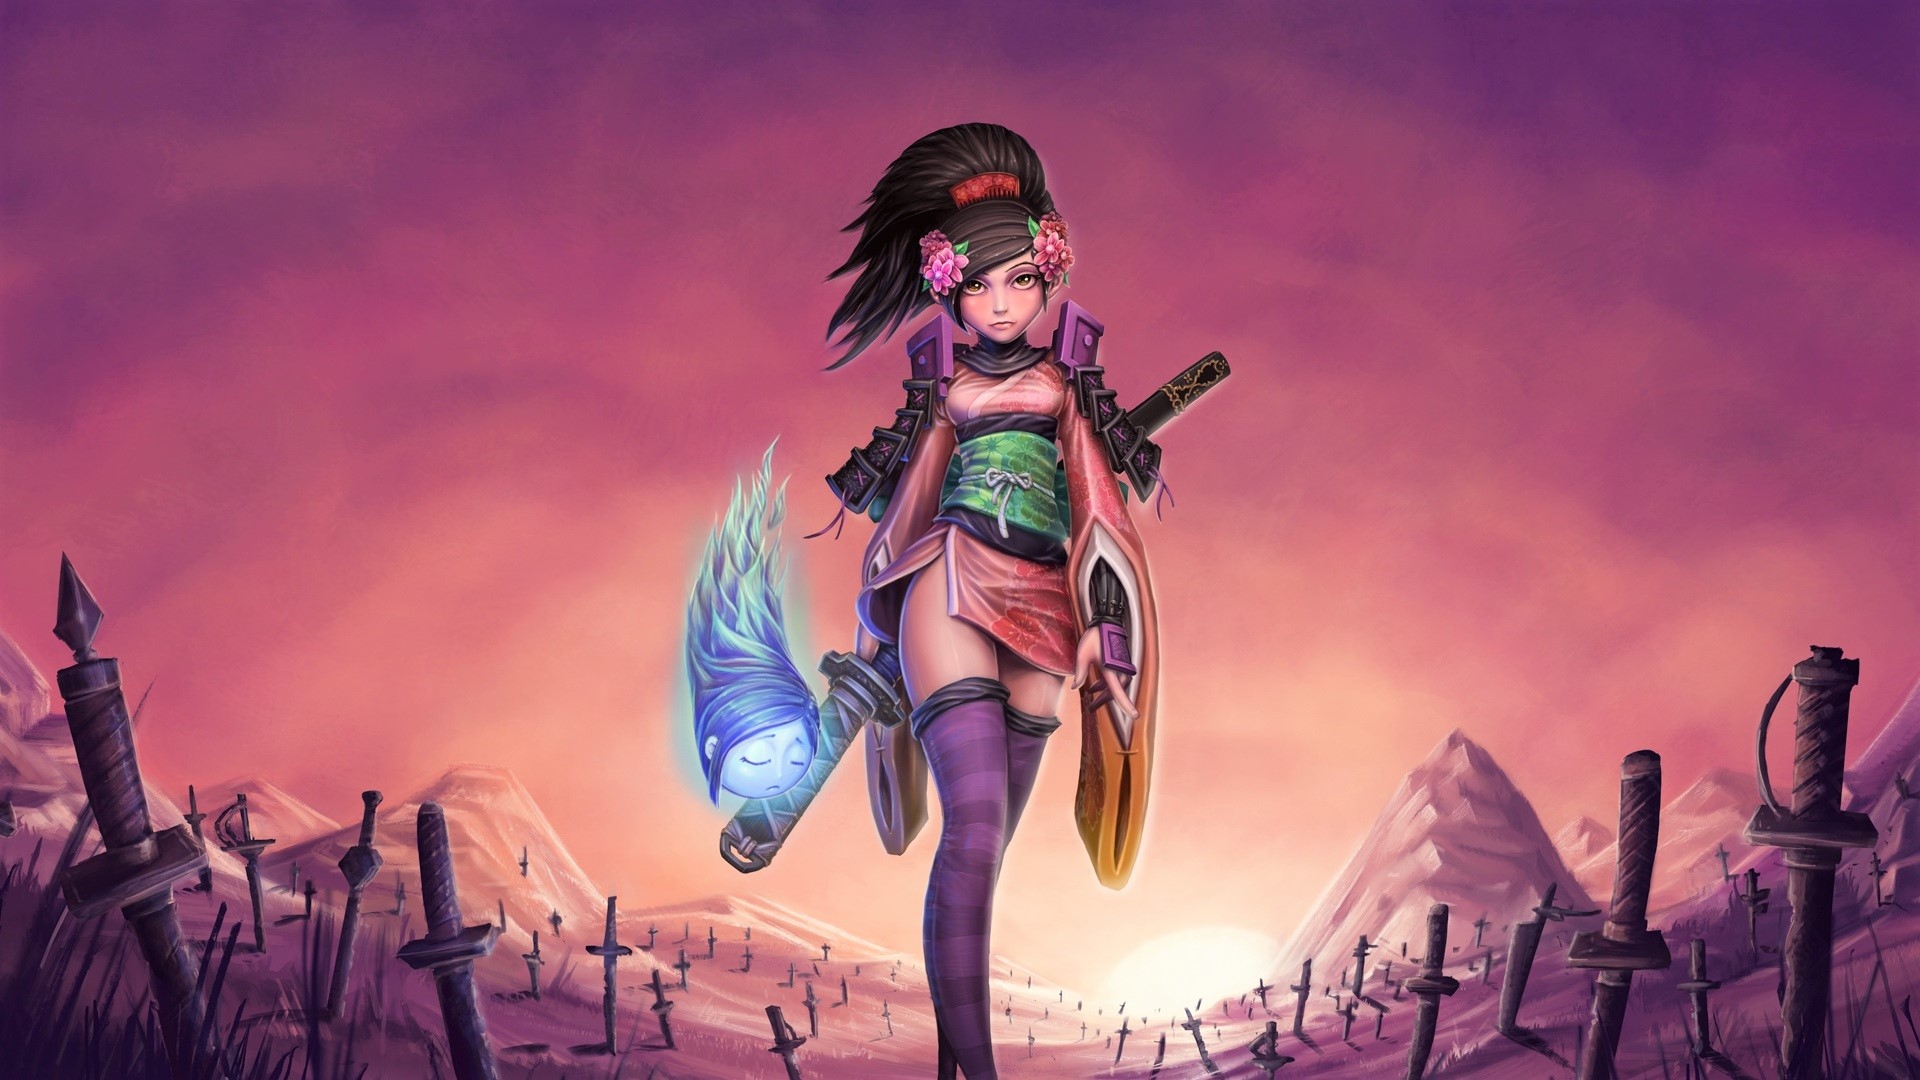 Mobile wallpaper: Warrior, Samurai, Spirit, Video Game, Woman Warrior,  Muramasa: The Demon Blade, 852981 download the picture for free.